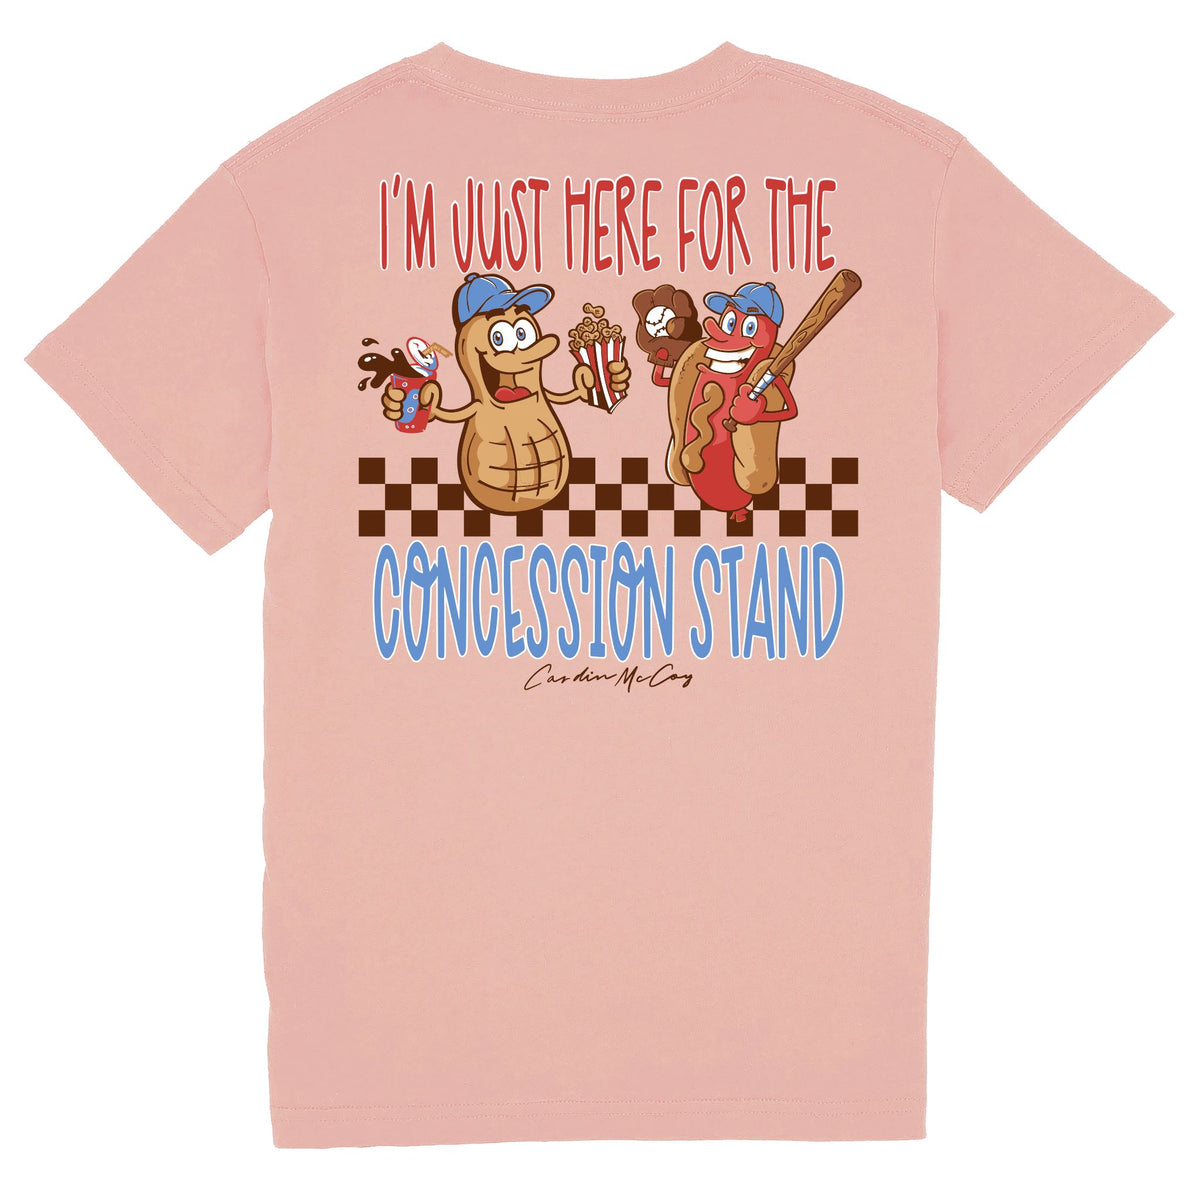 Kids' Concession Stand Short Sleeve Pocket Tee Short Sleeve T-Shirt Cardin McCoy Rose Tan XXS (2/3) 